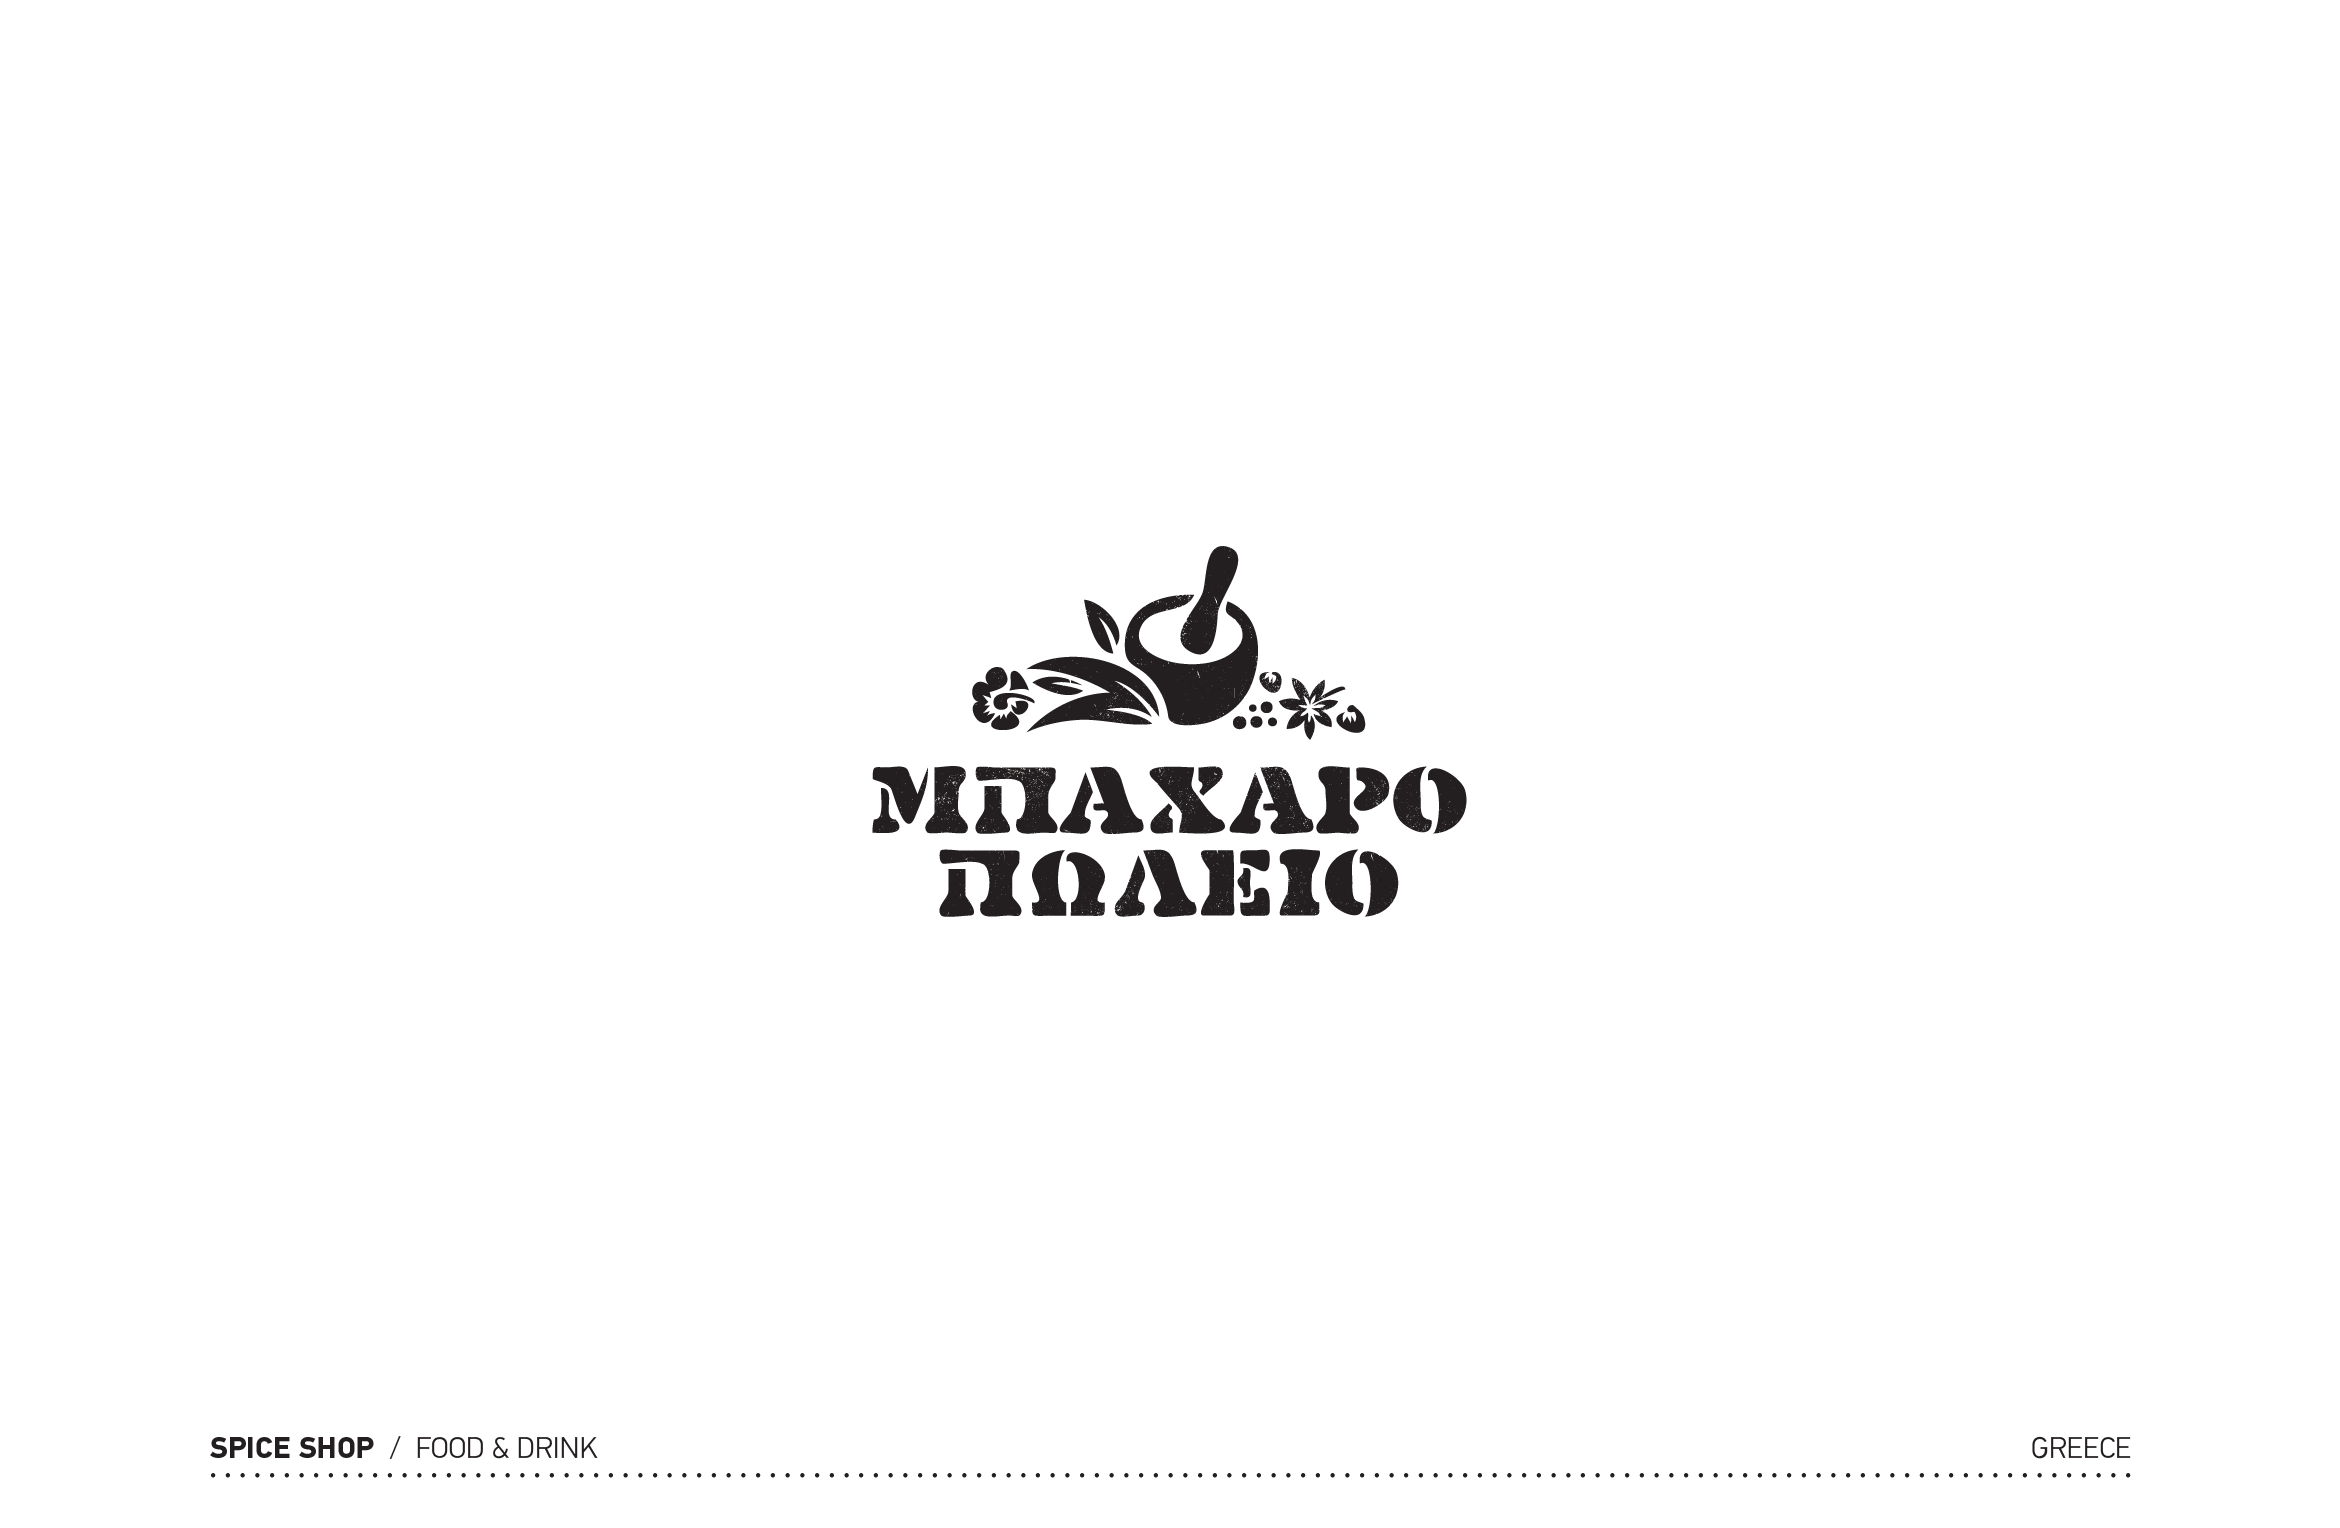 Mpaxaro Spice Shop by Dot Creative Studio